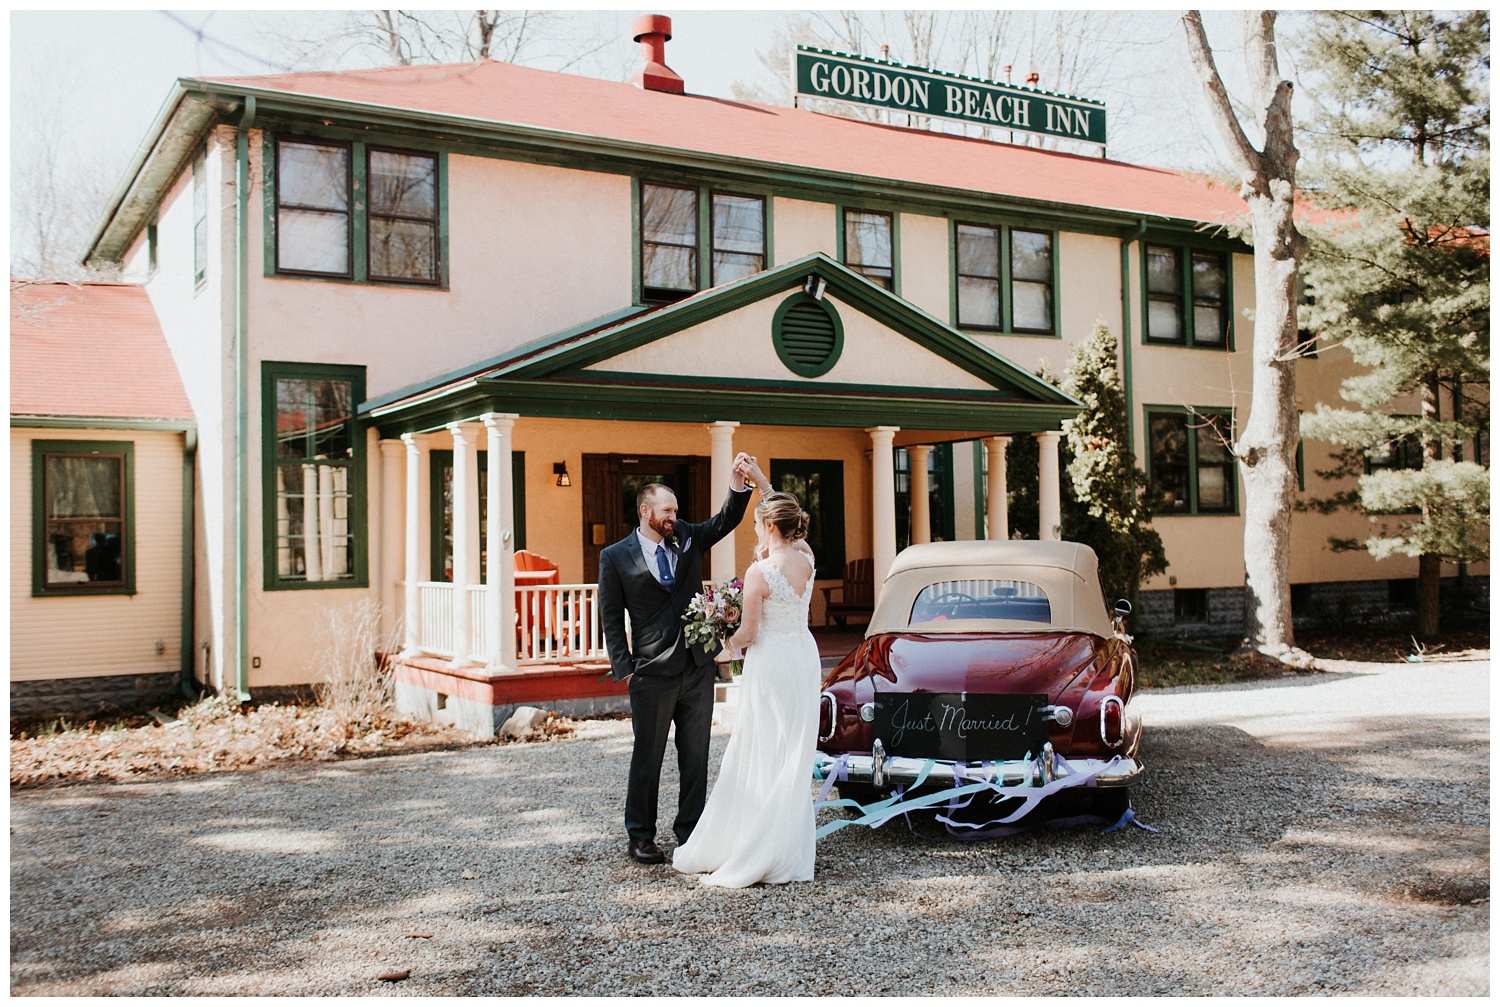 Gordon Beach Inn New Buffalo Wedding Photography53.jpg